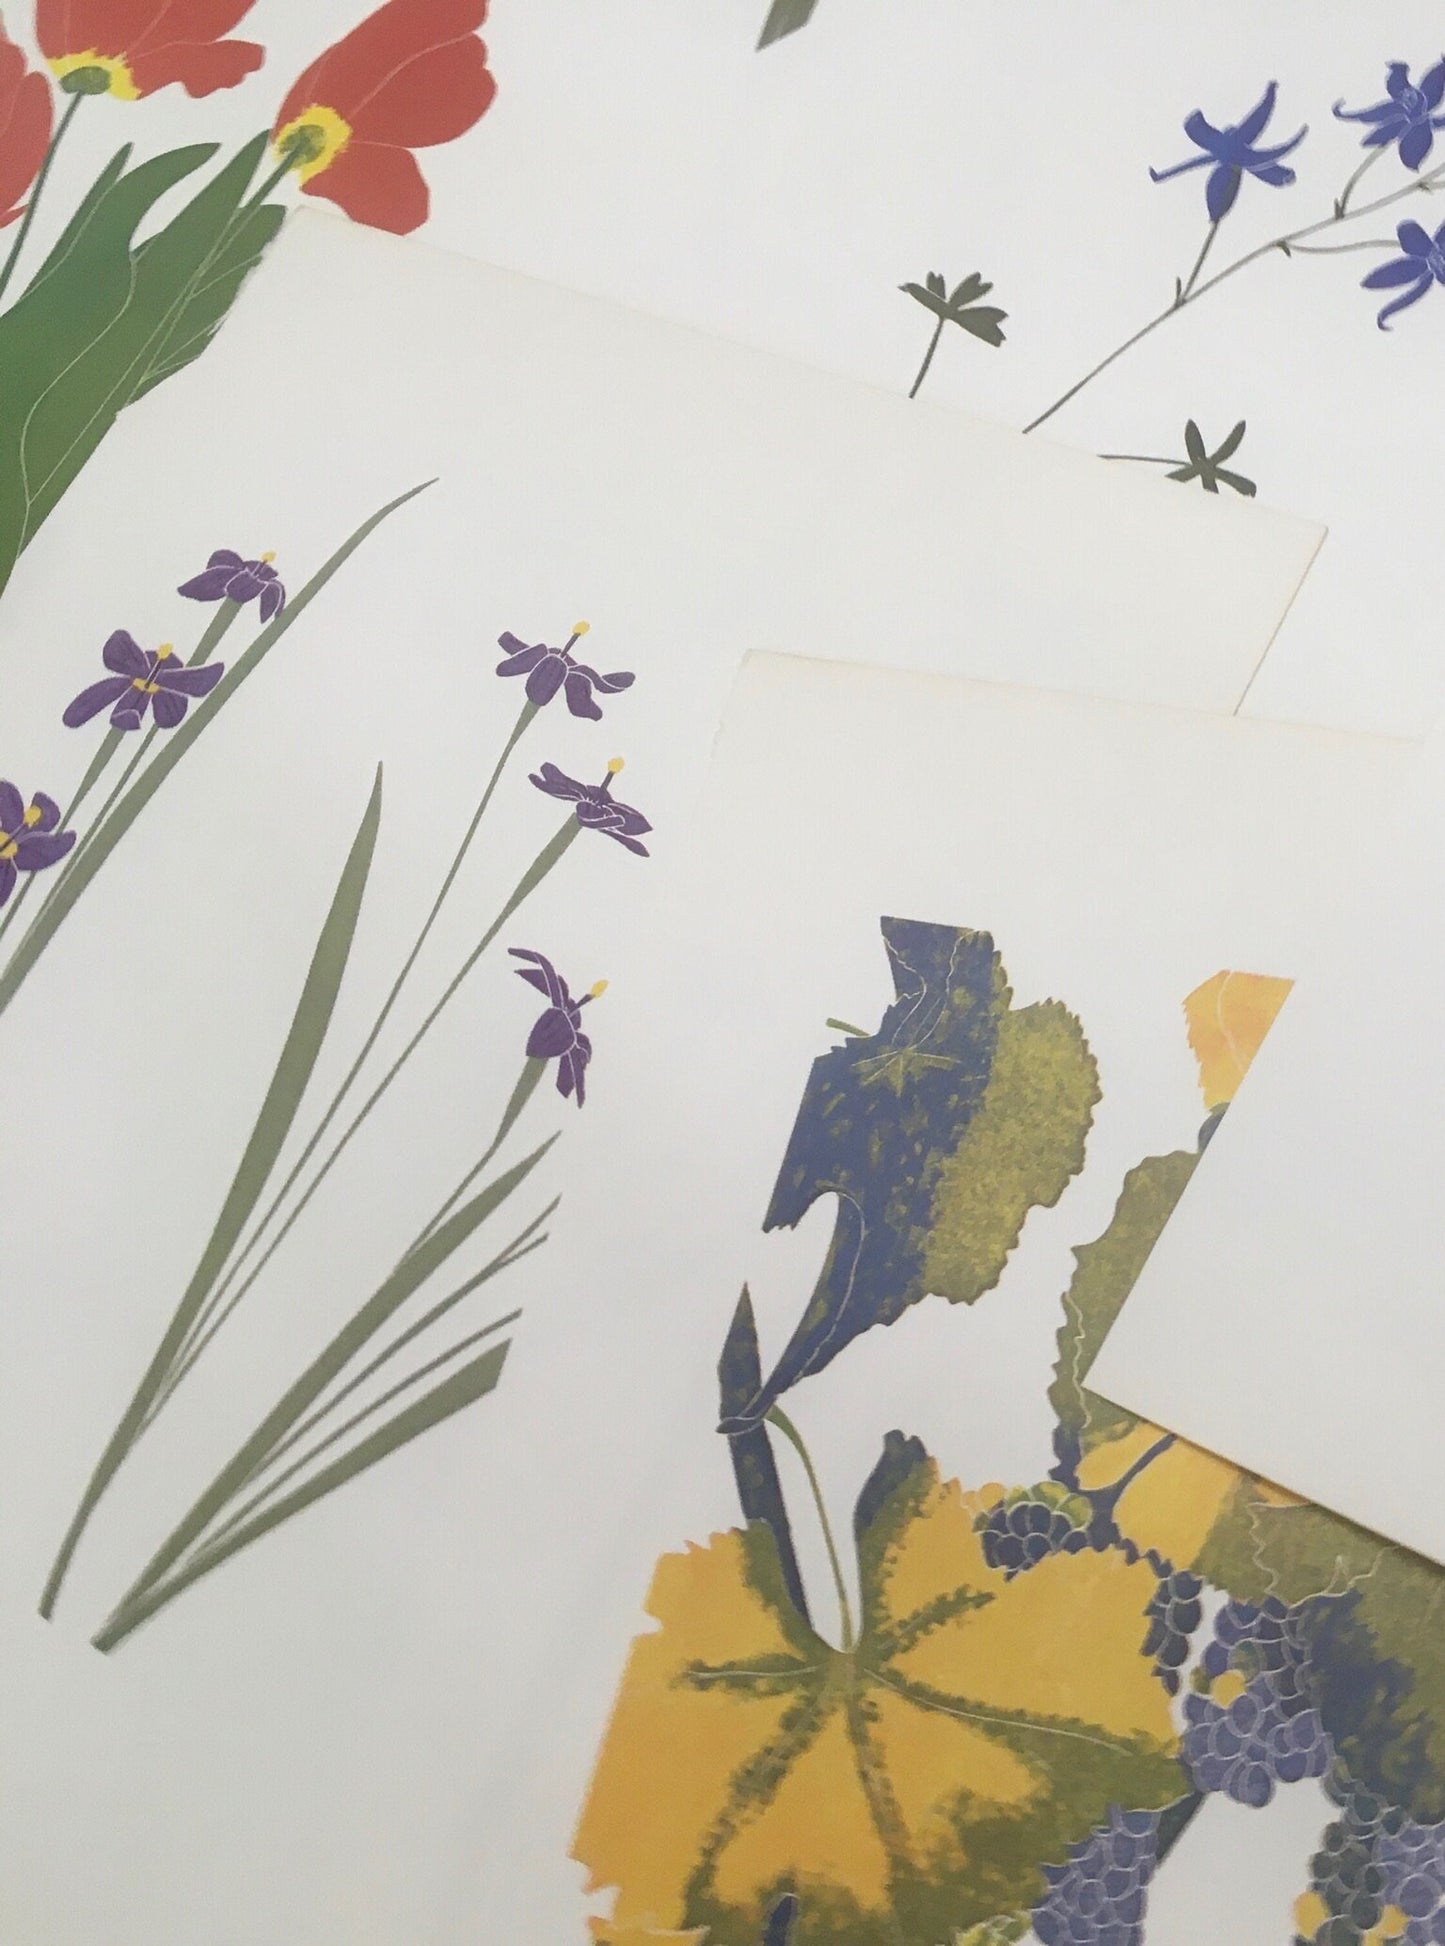 Four vintage bookplates featuring linocut botanical prints